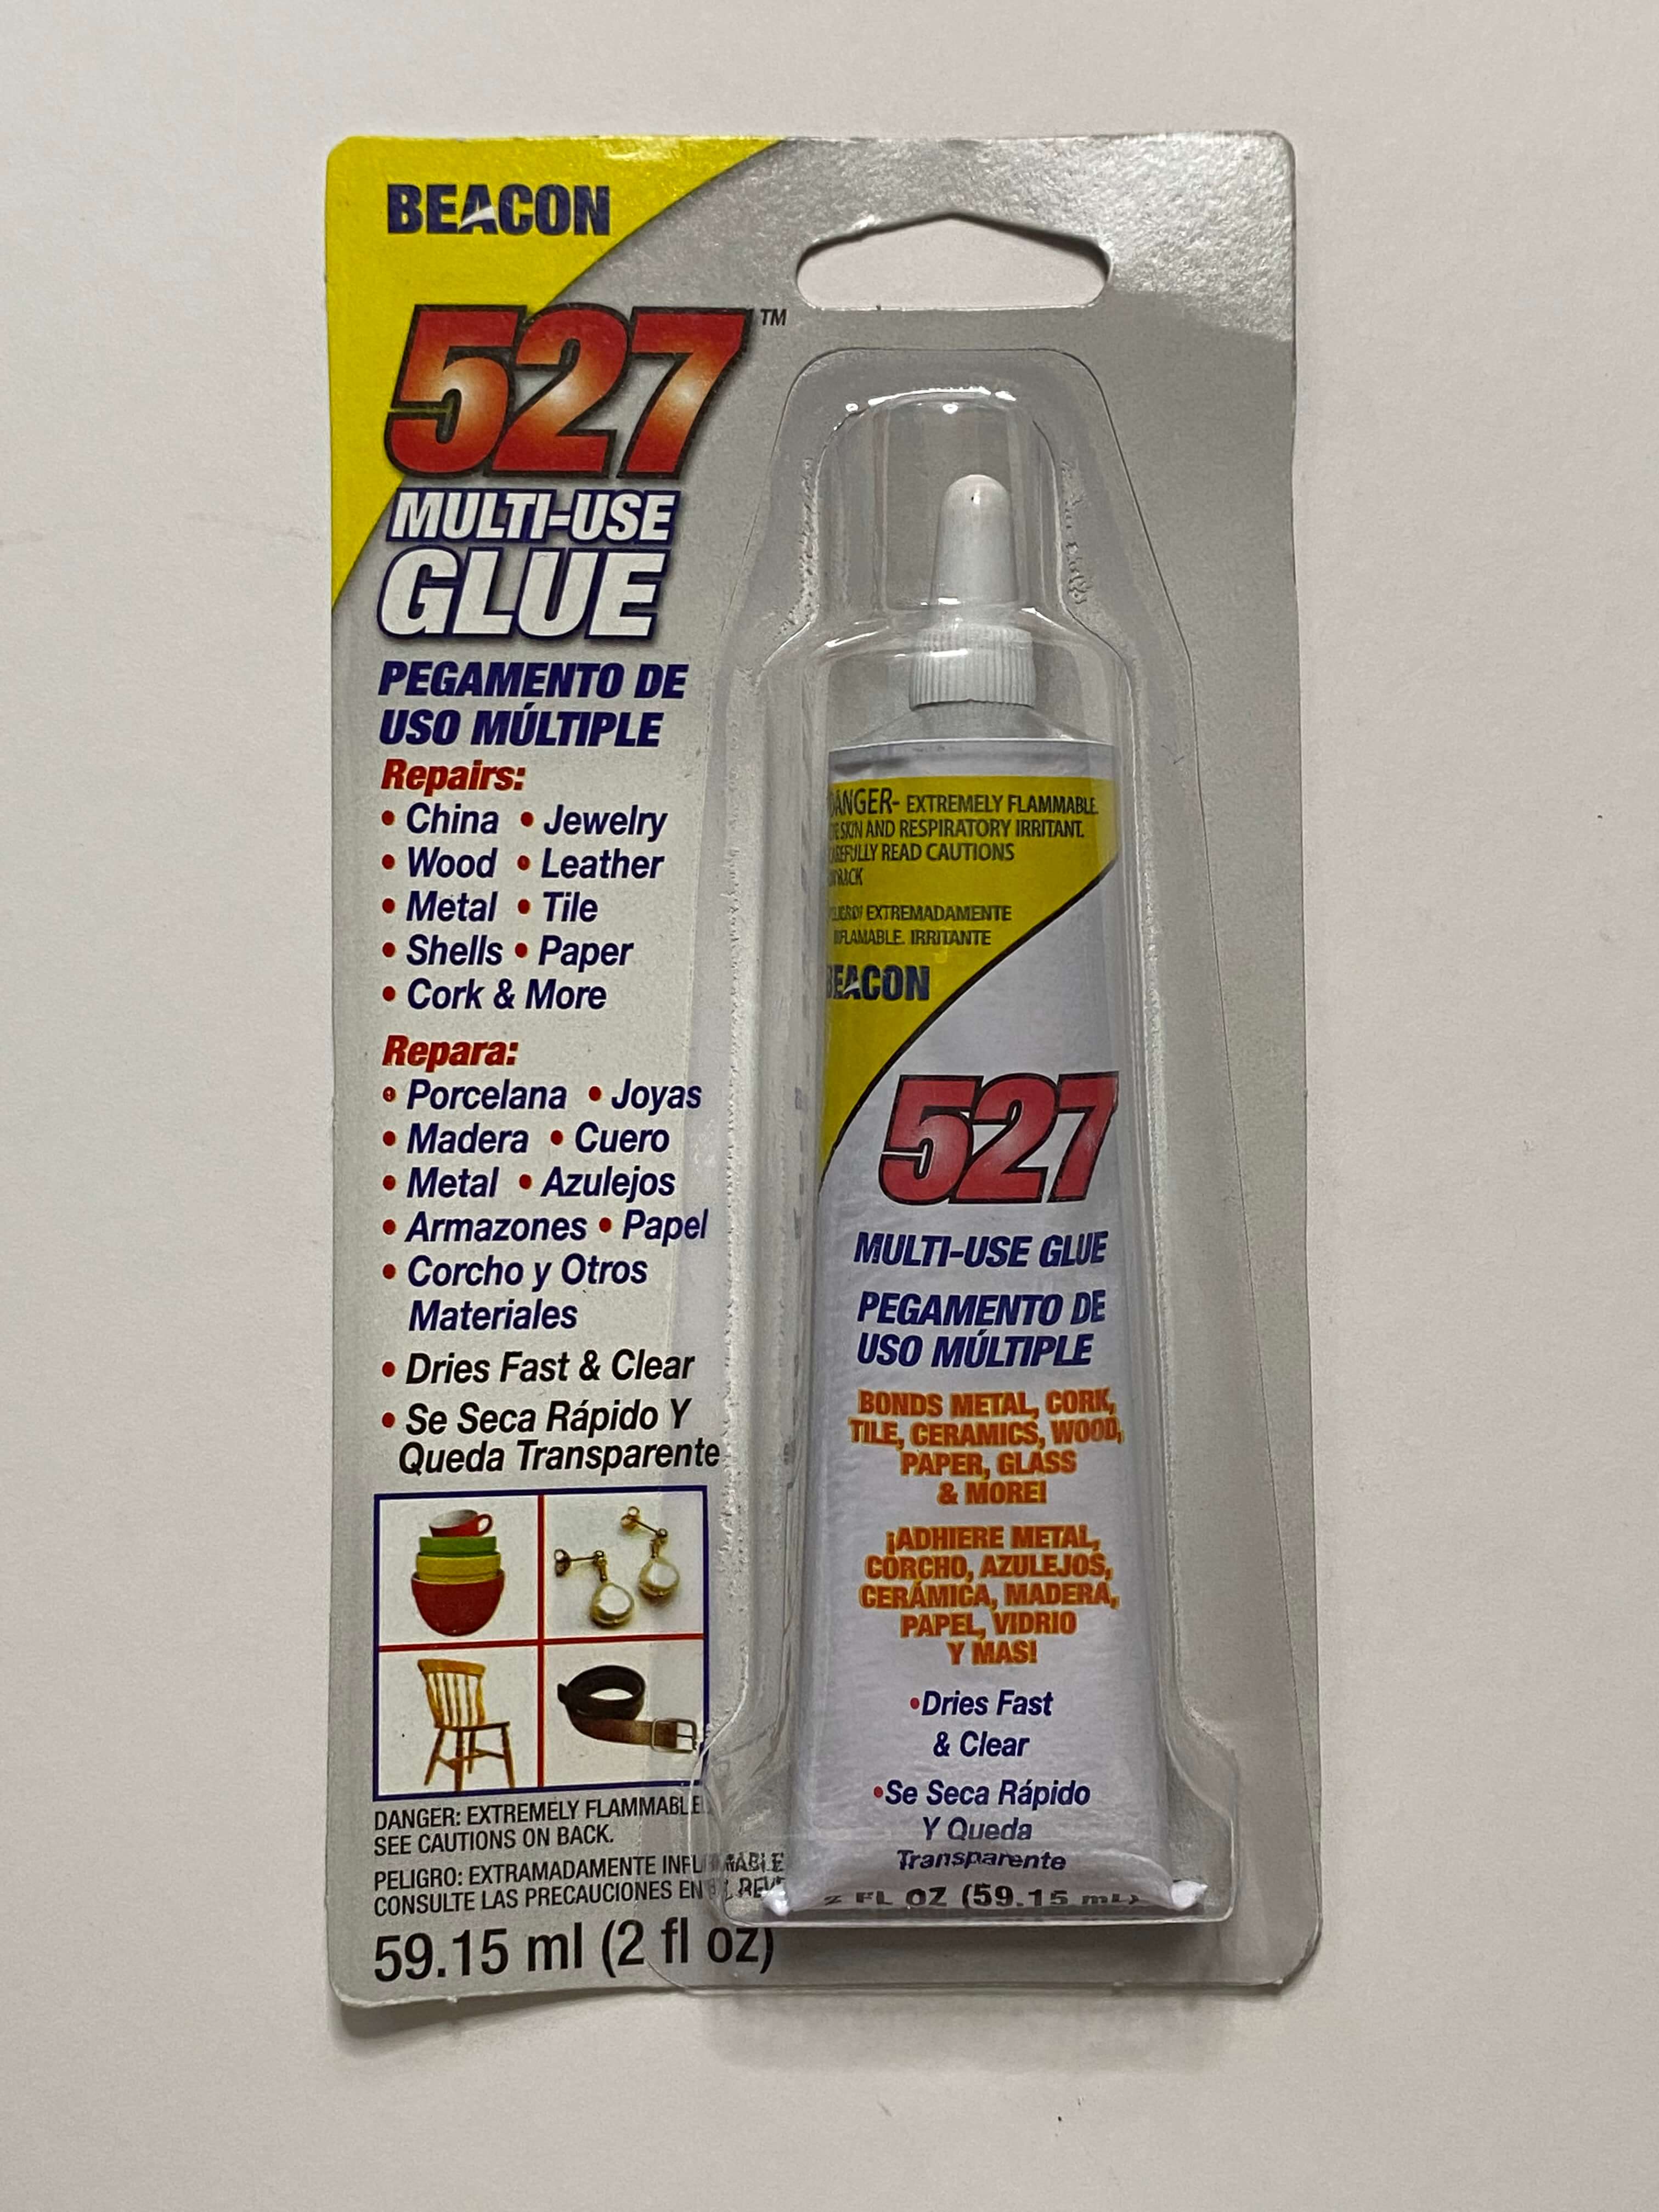 Beacon 527 glue 